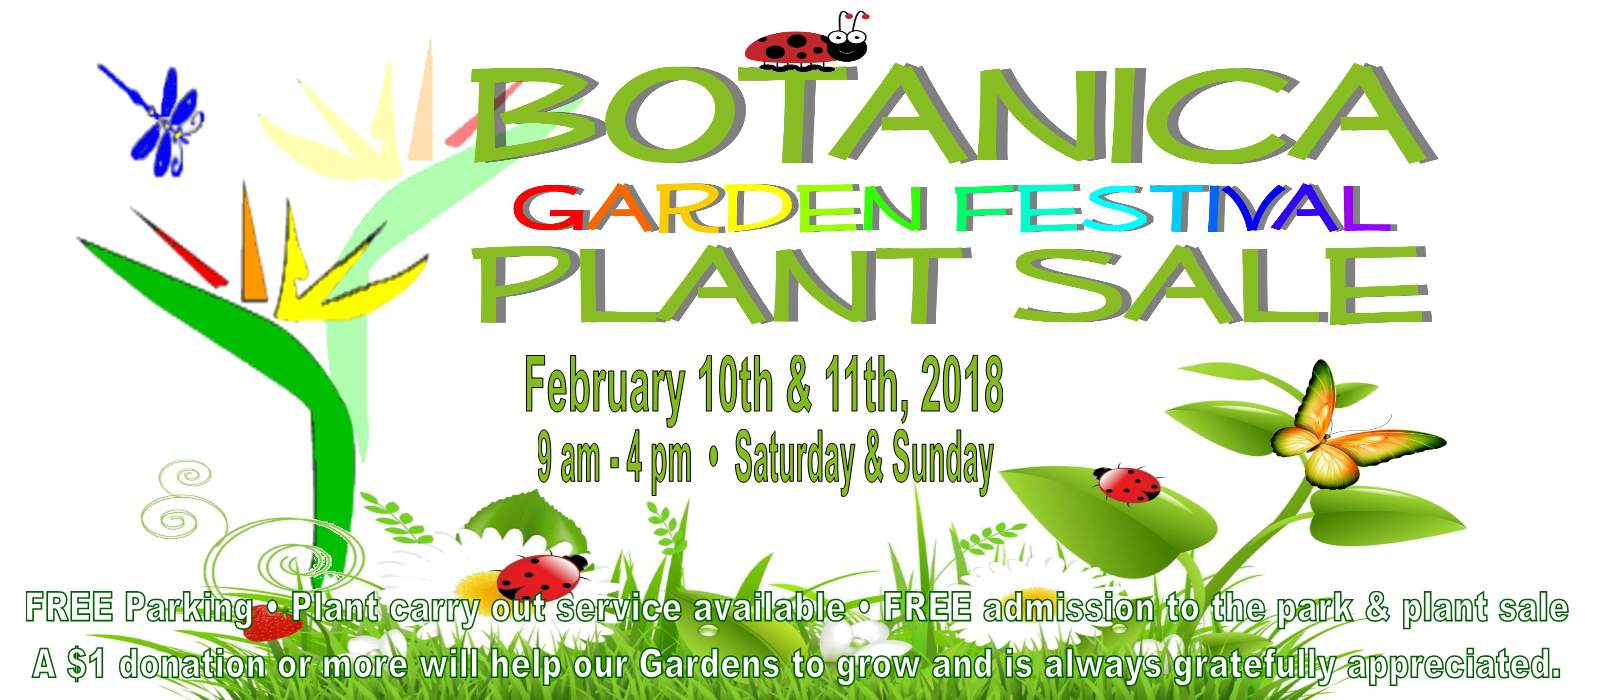 Botanica Garden Festival Plant Sale